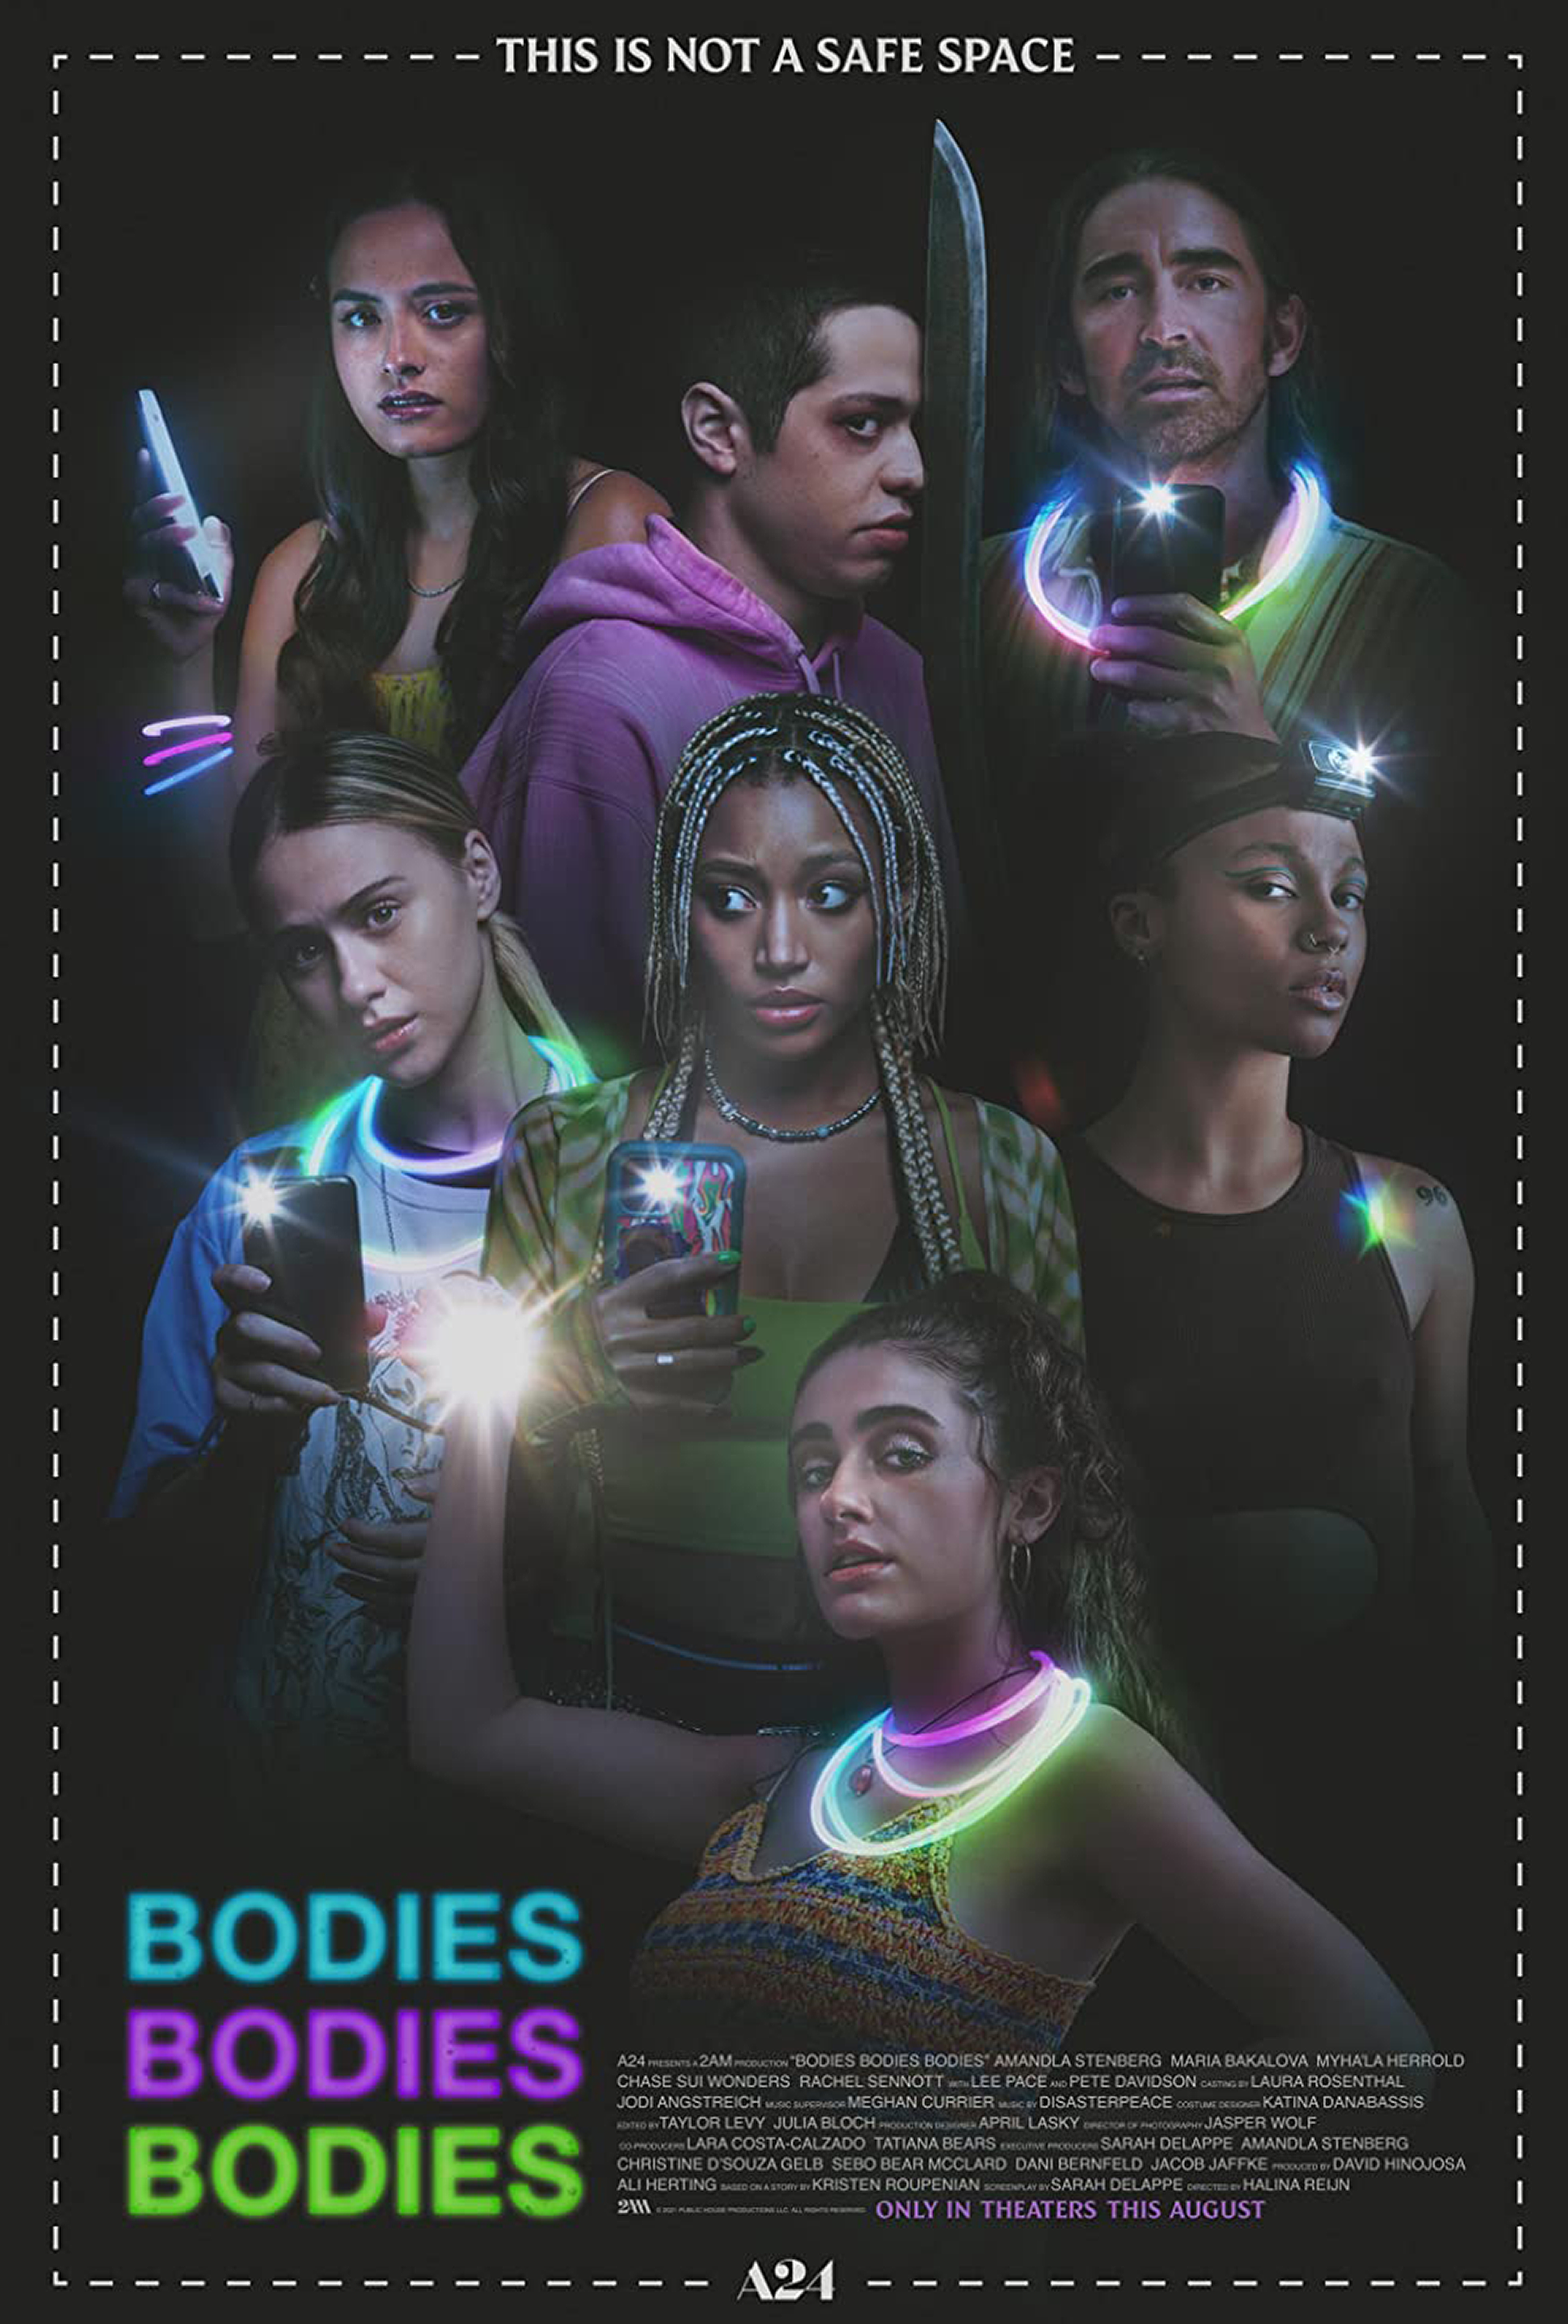 Bodies Bodies Bodies (Poster)